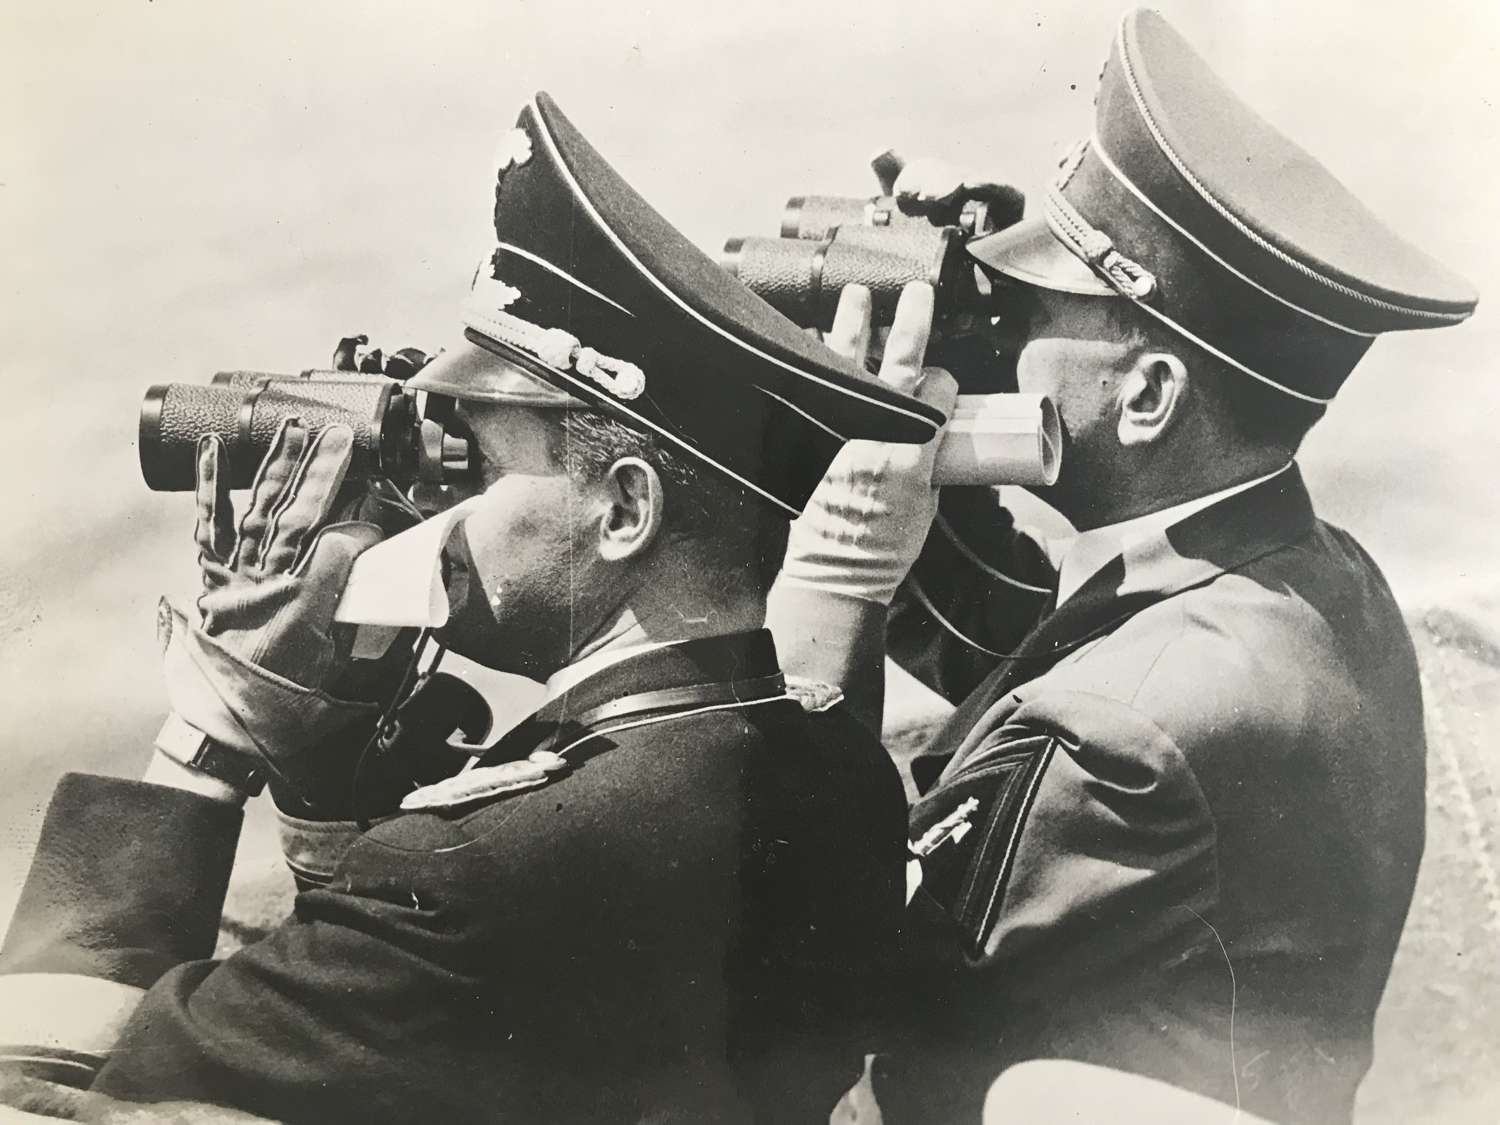 Press photo of Hitler and Von Ribbentrop with binoculars